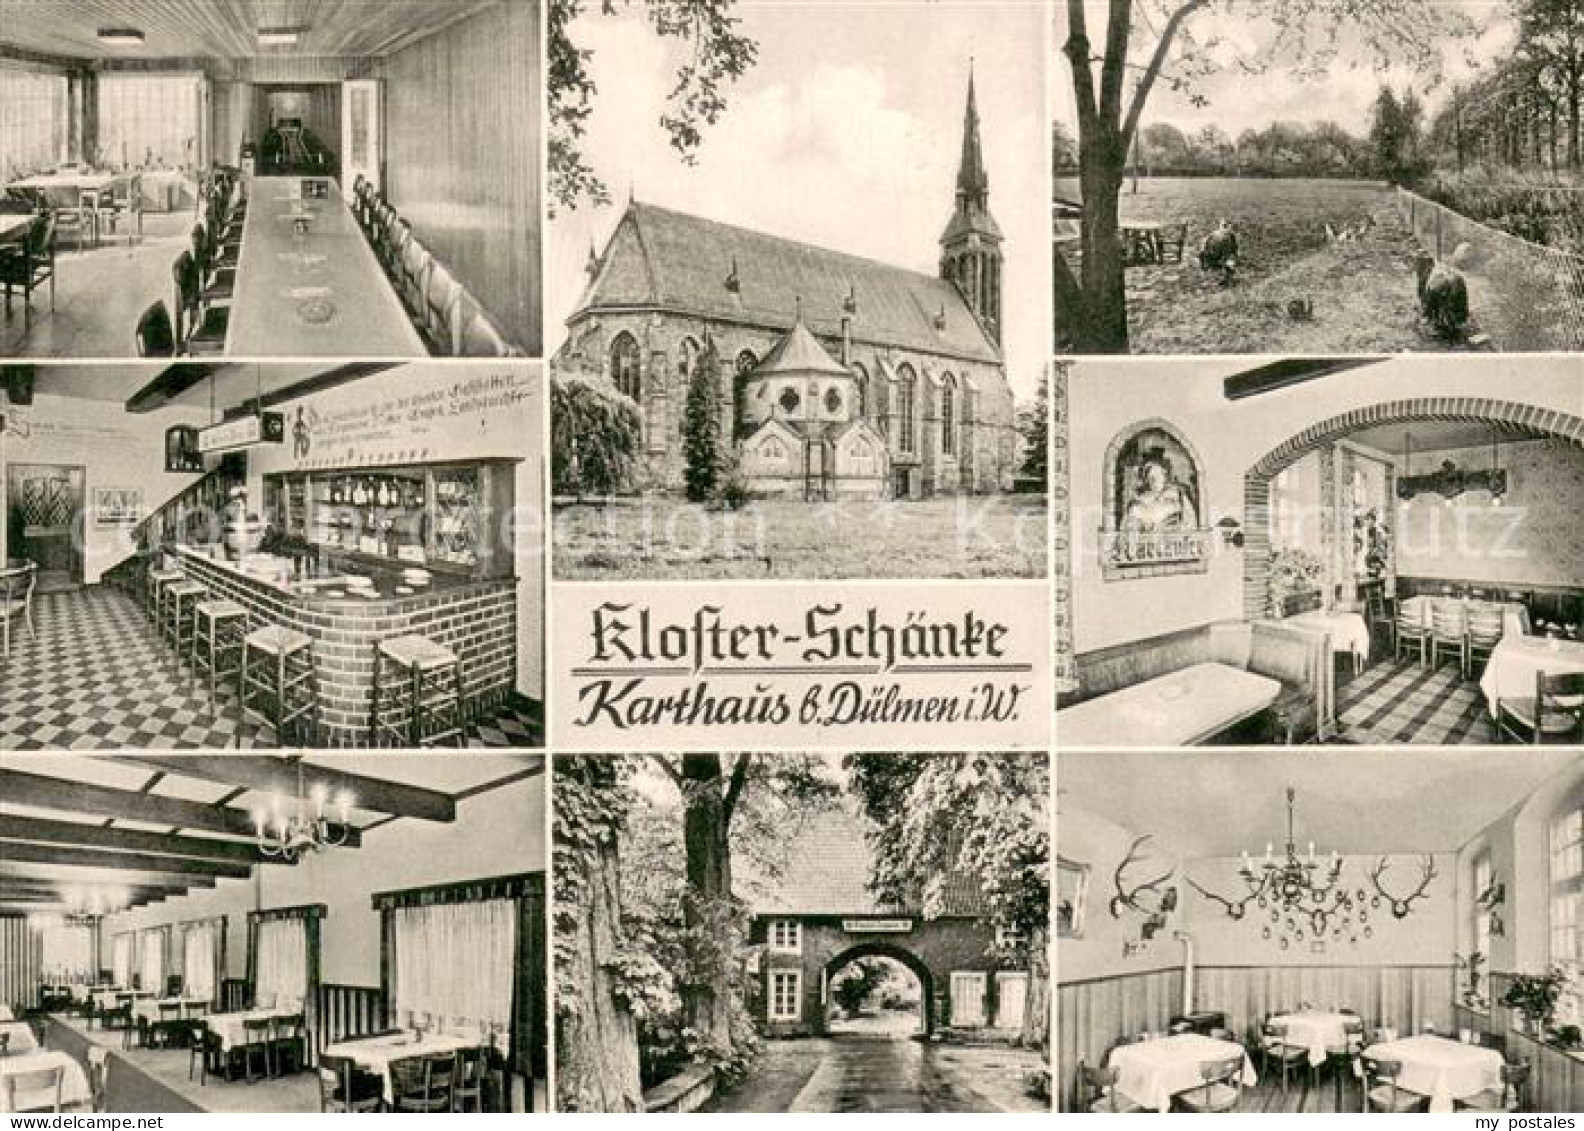 73695179 Duelmen Kloster Schaenke Karthaus Gastraeume Bar  Duelmen - Dülmen